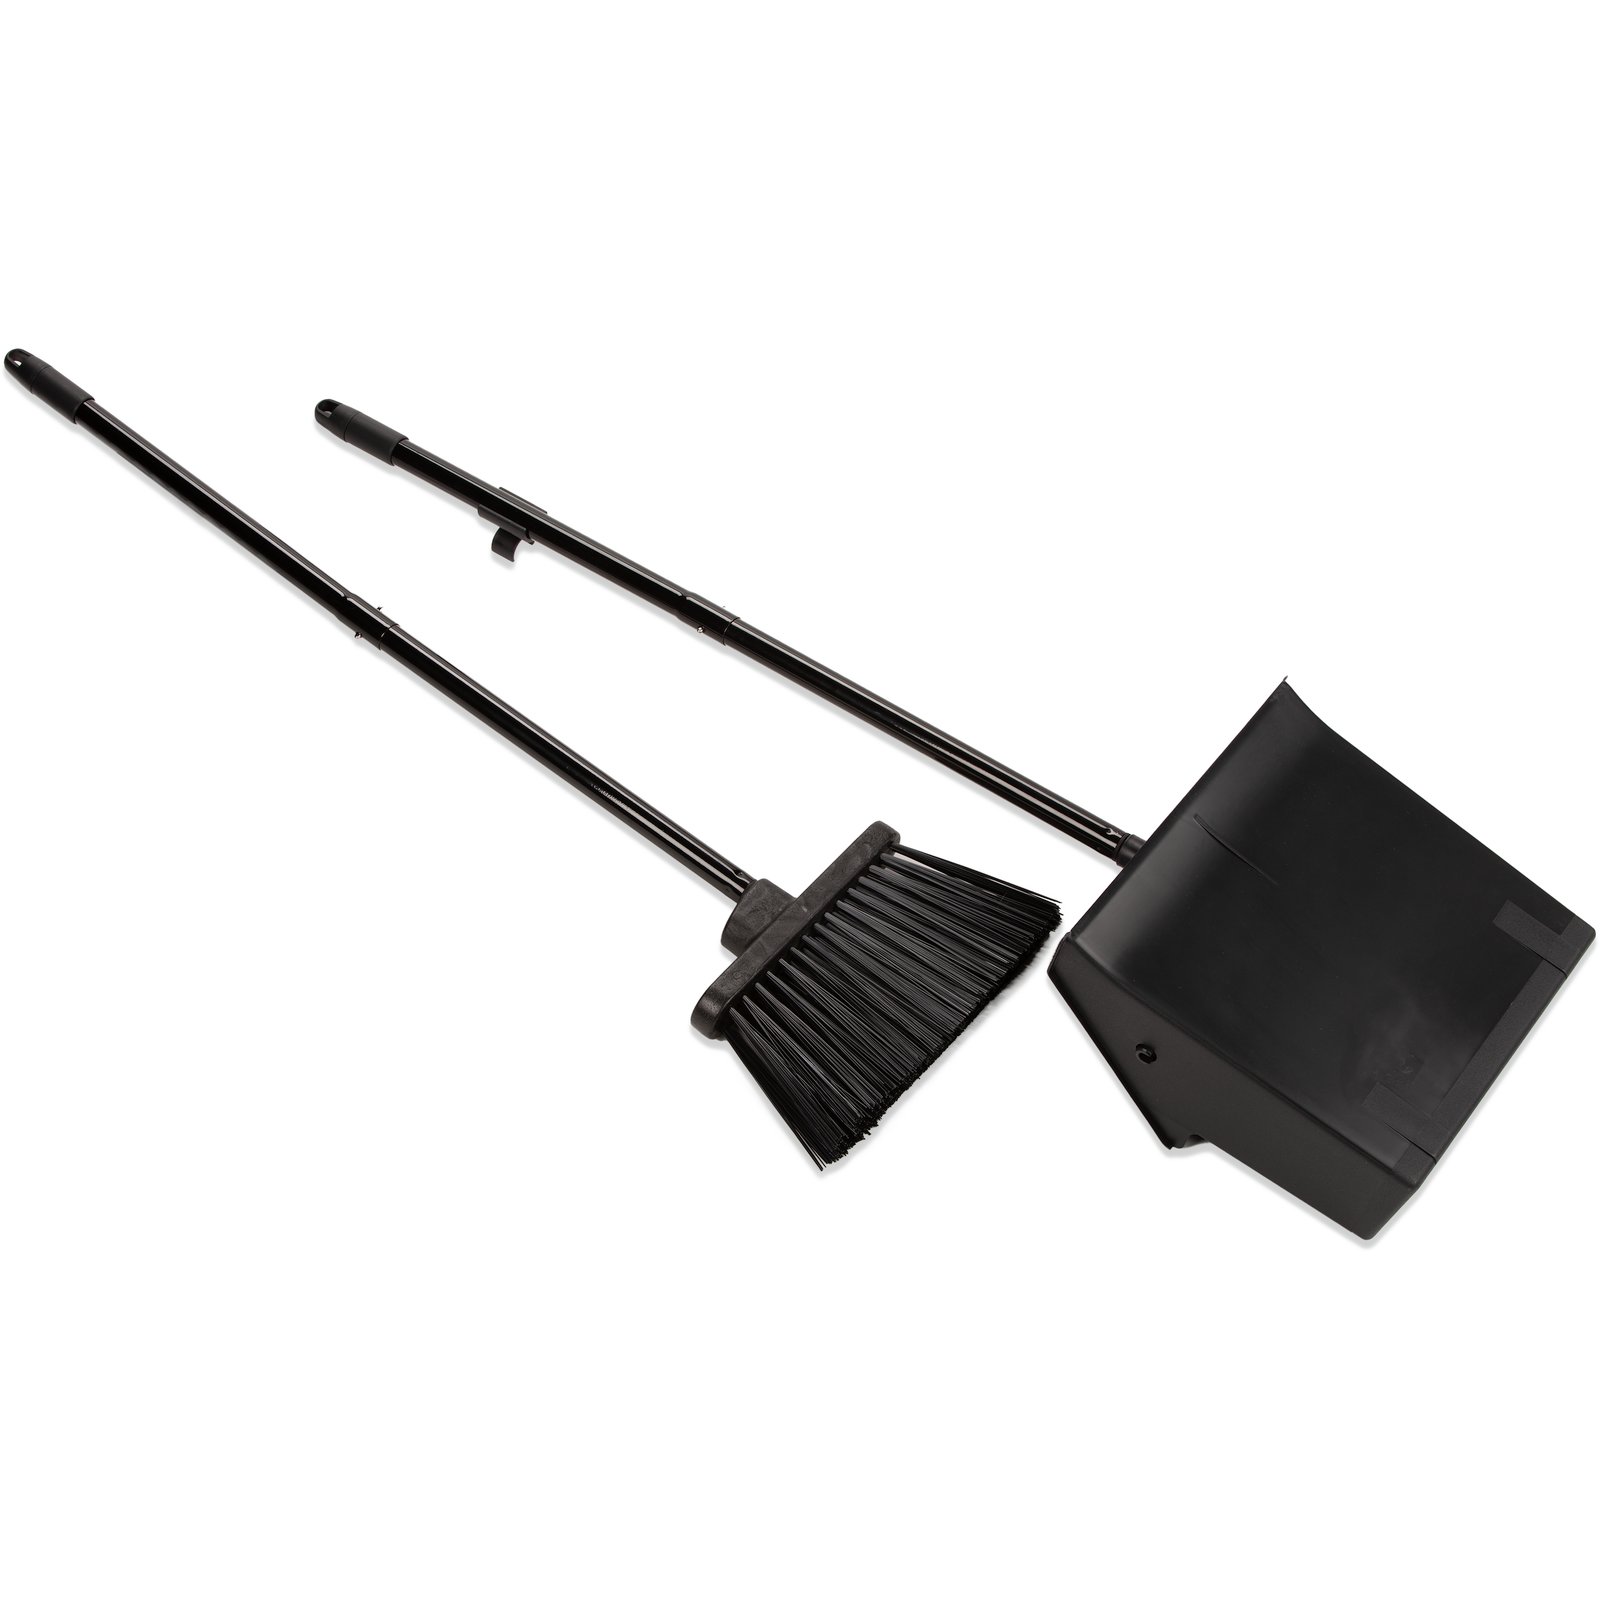 36141503 - Duo-Pan™ Upright Dust Pan & Broom 36 - Black